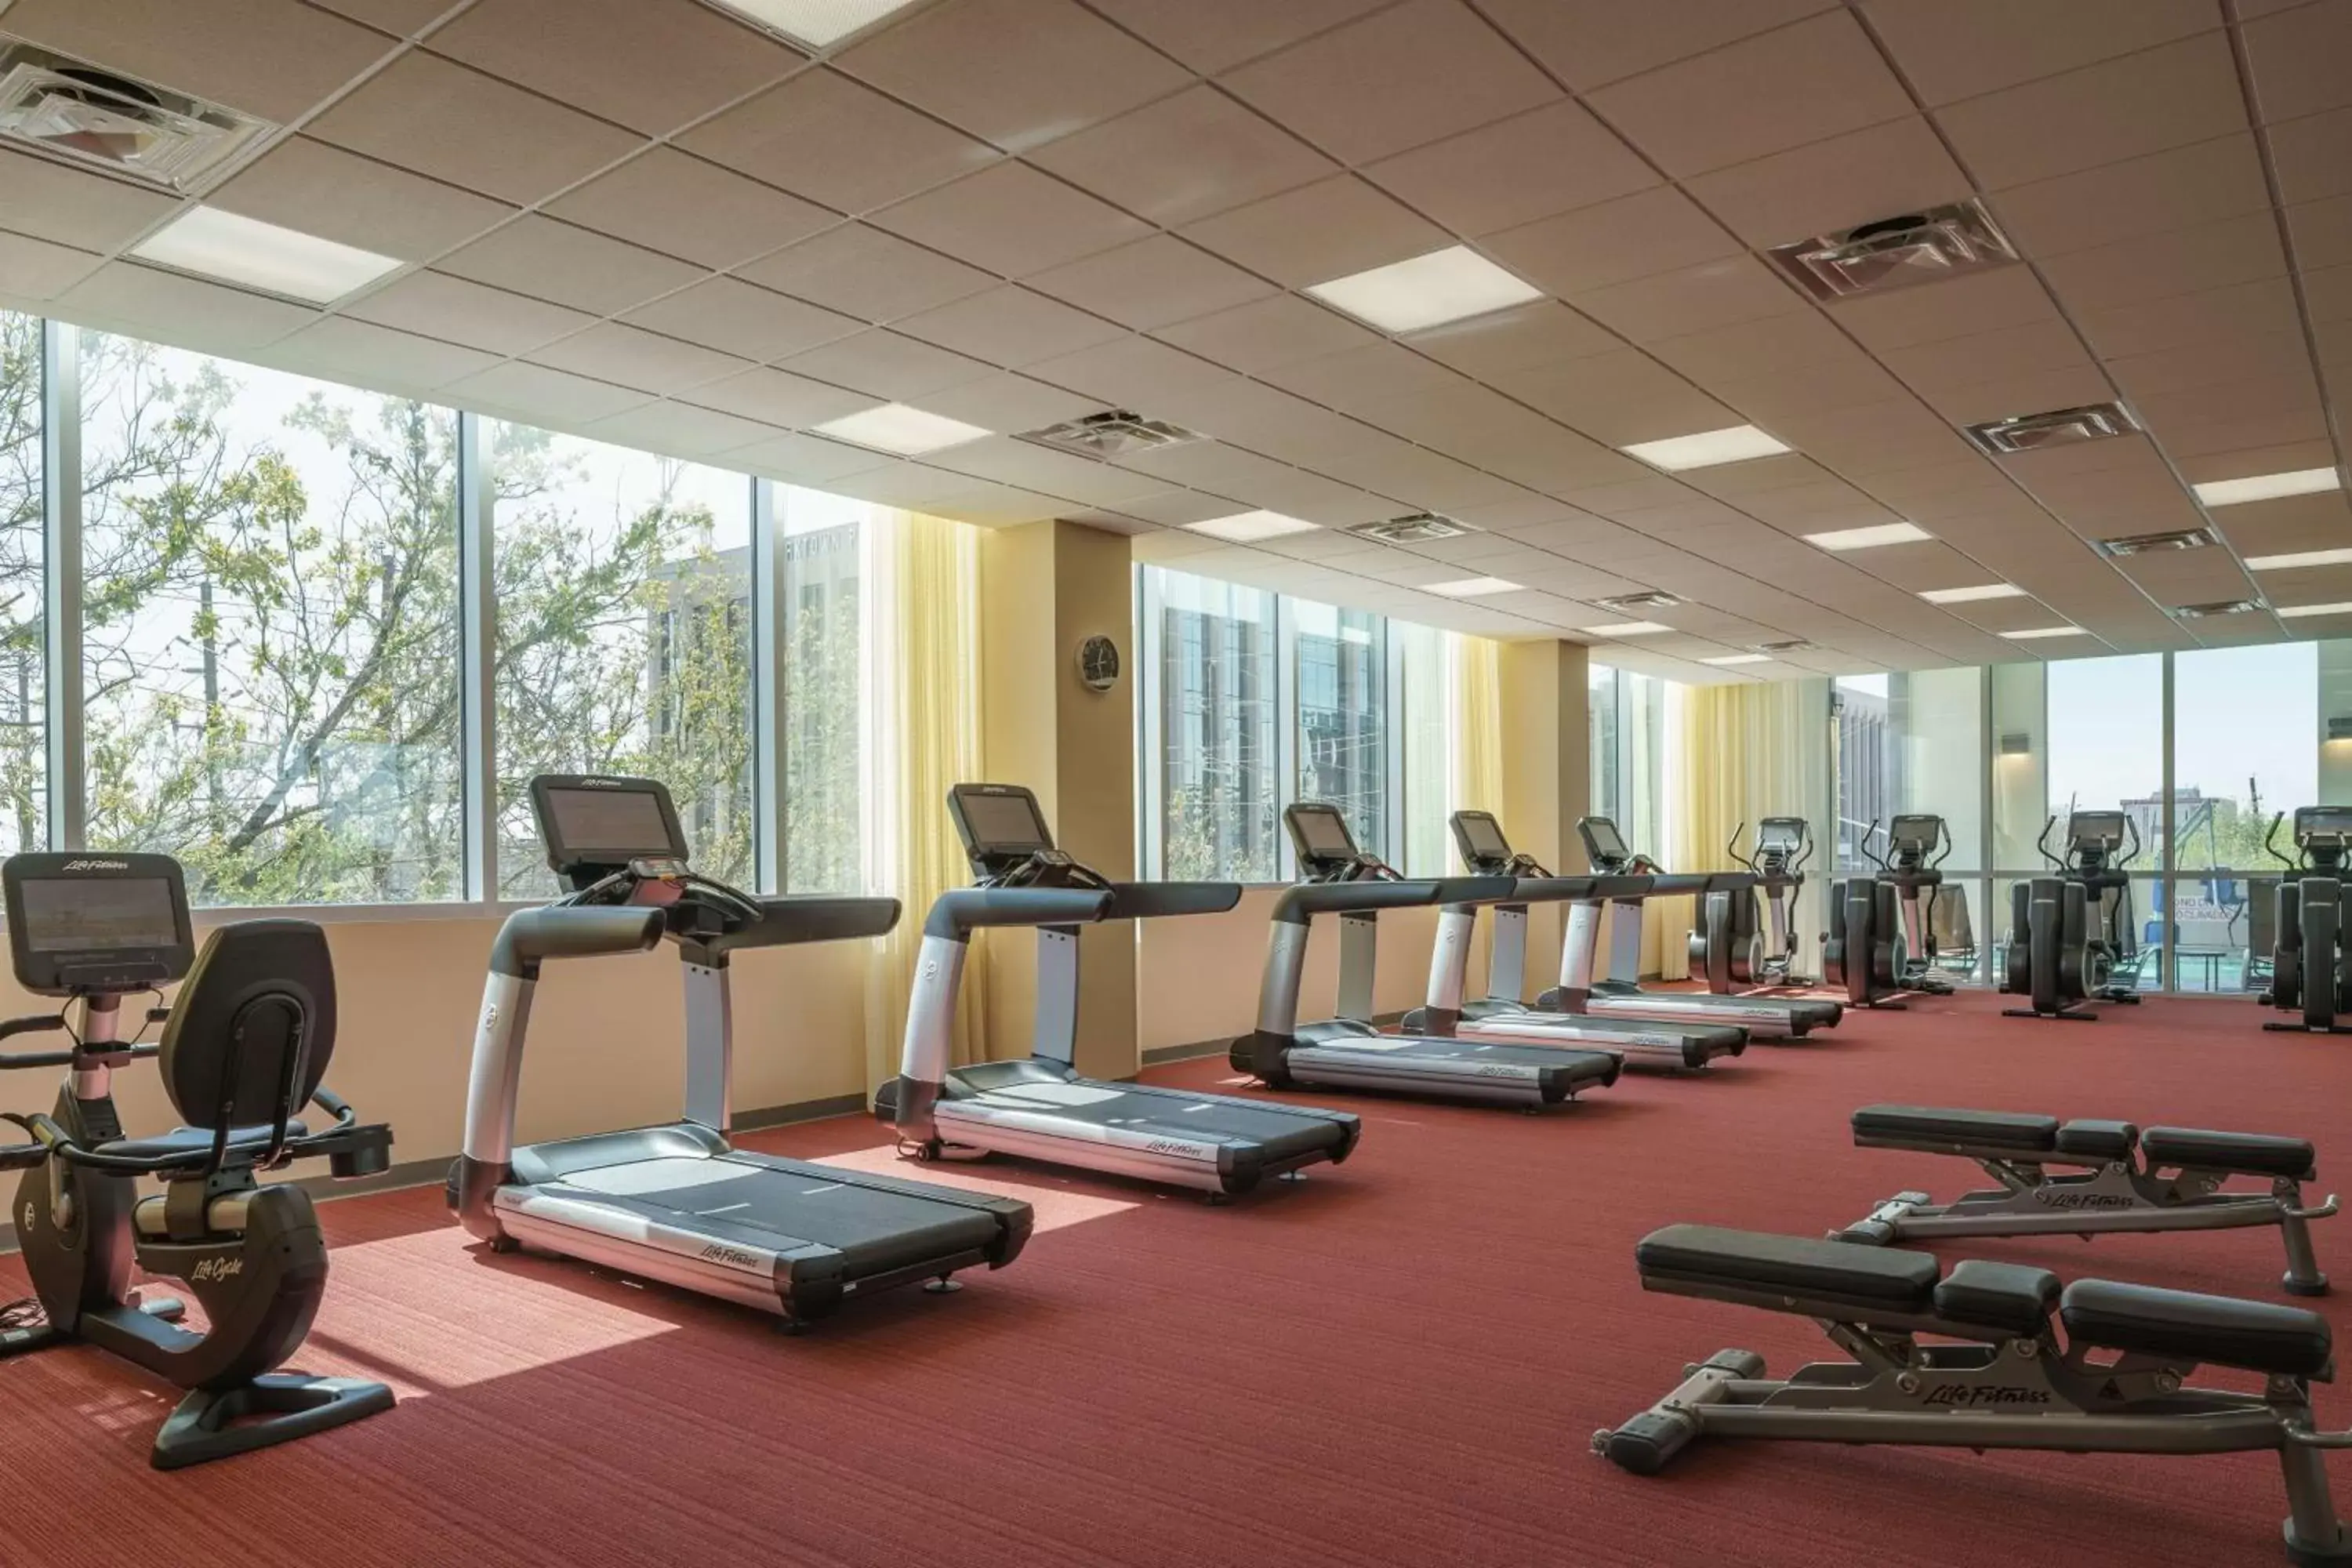 Fitness centre/facilities, Fitness Center/Facilities in Hyatt Place Houston Galleria